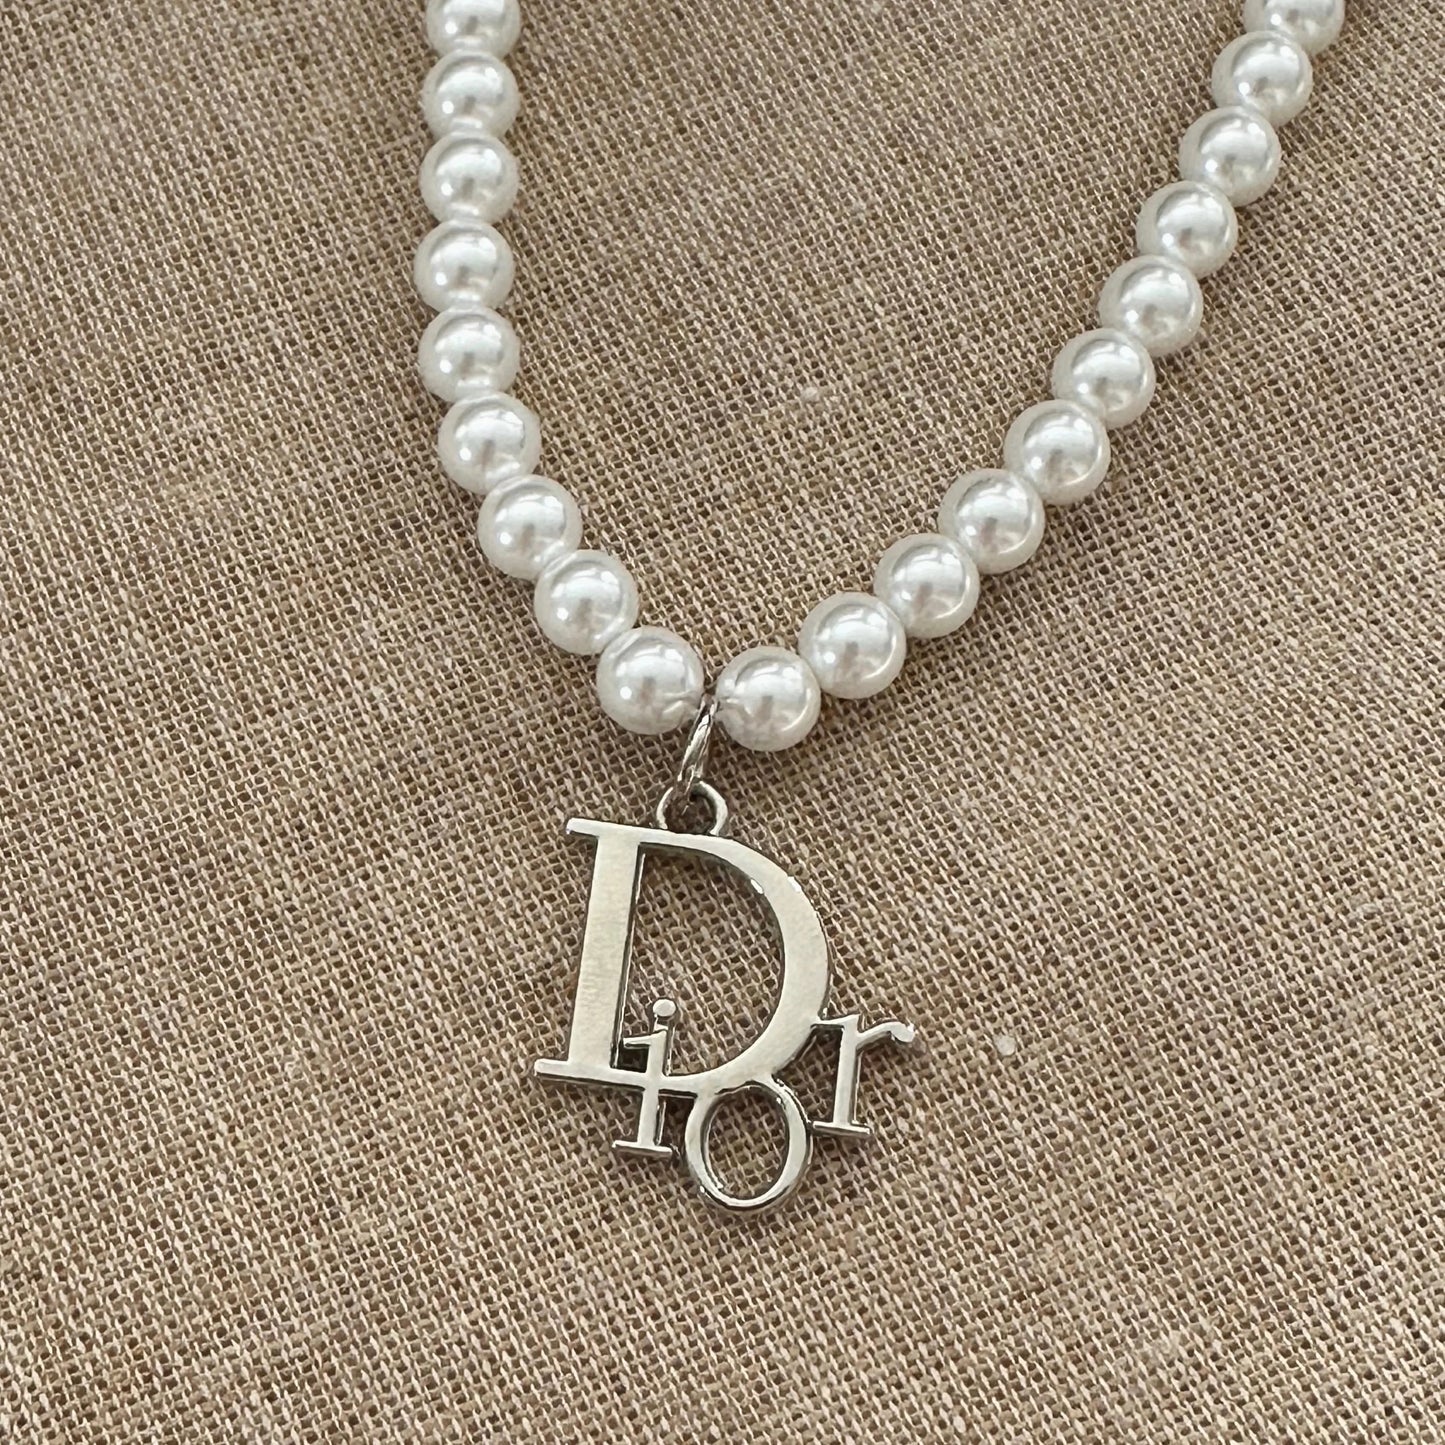 Repurposed Vintage Dior Pearl Necklace